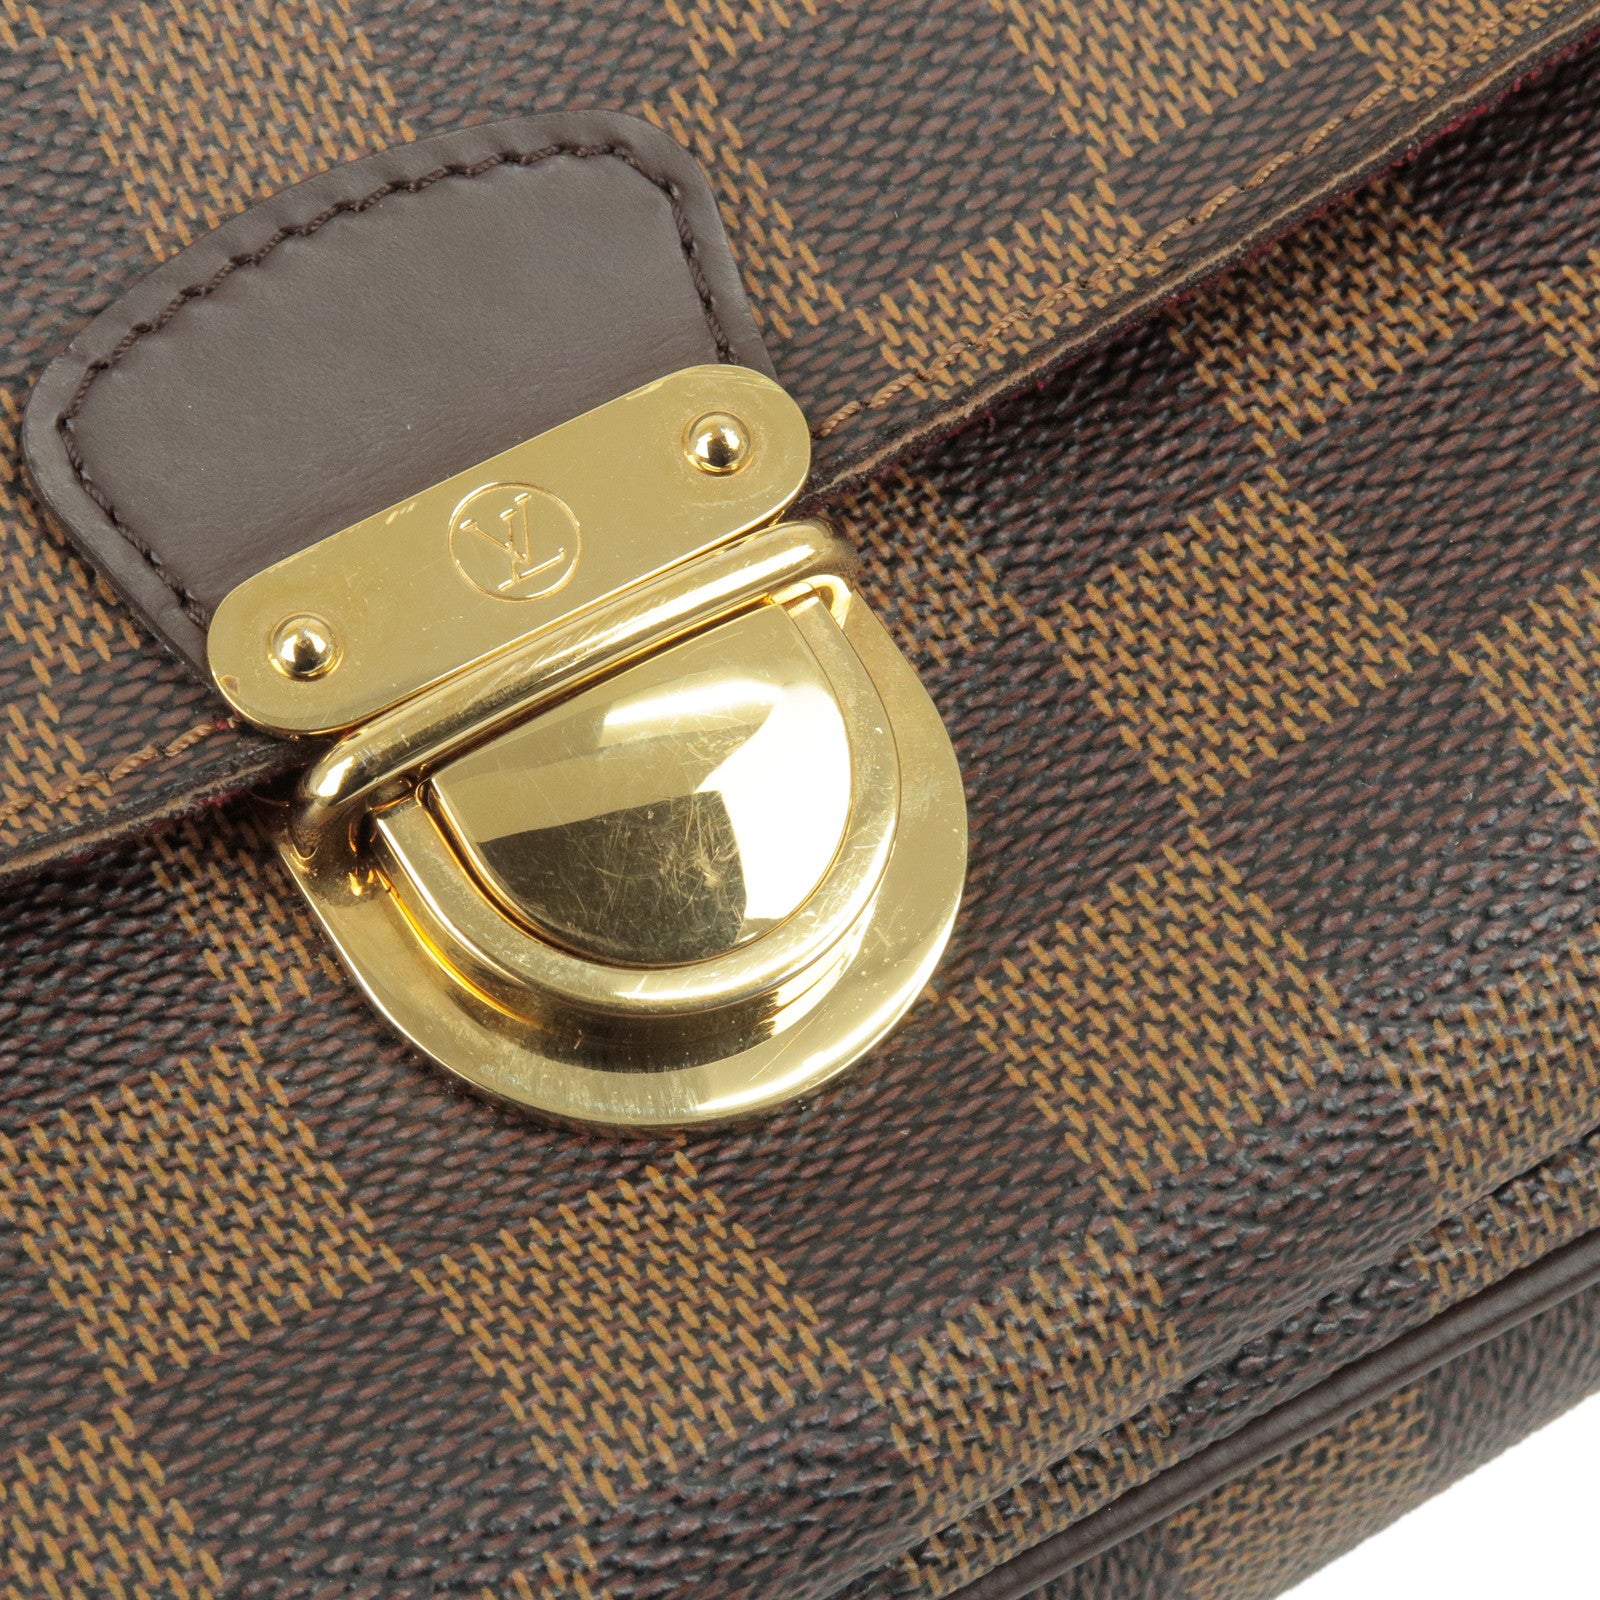 Louis-Vuitton-Damier-Ravello-GM-Shoulder-Bag-Brown-N60006